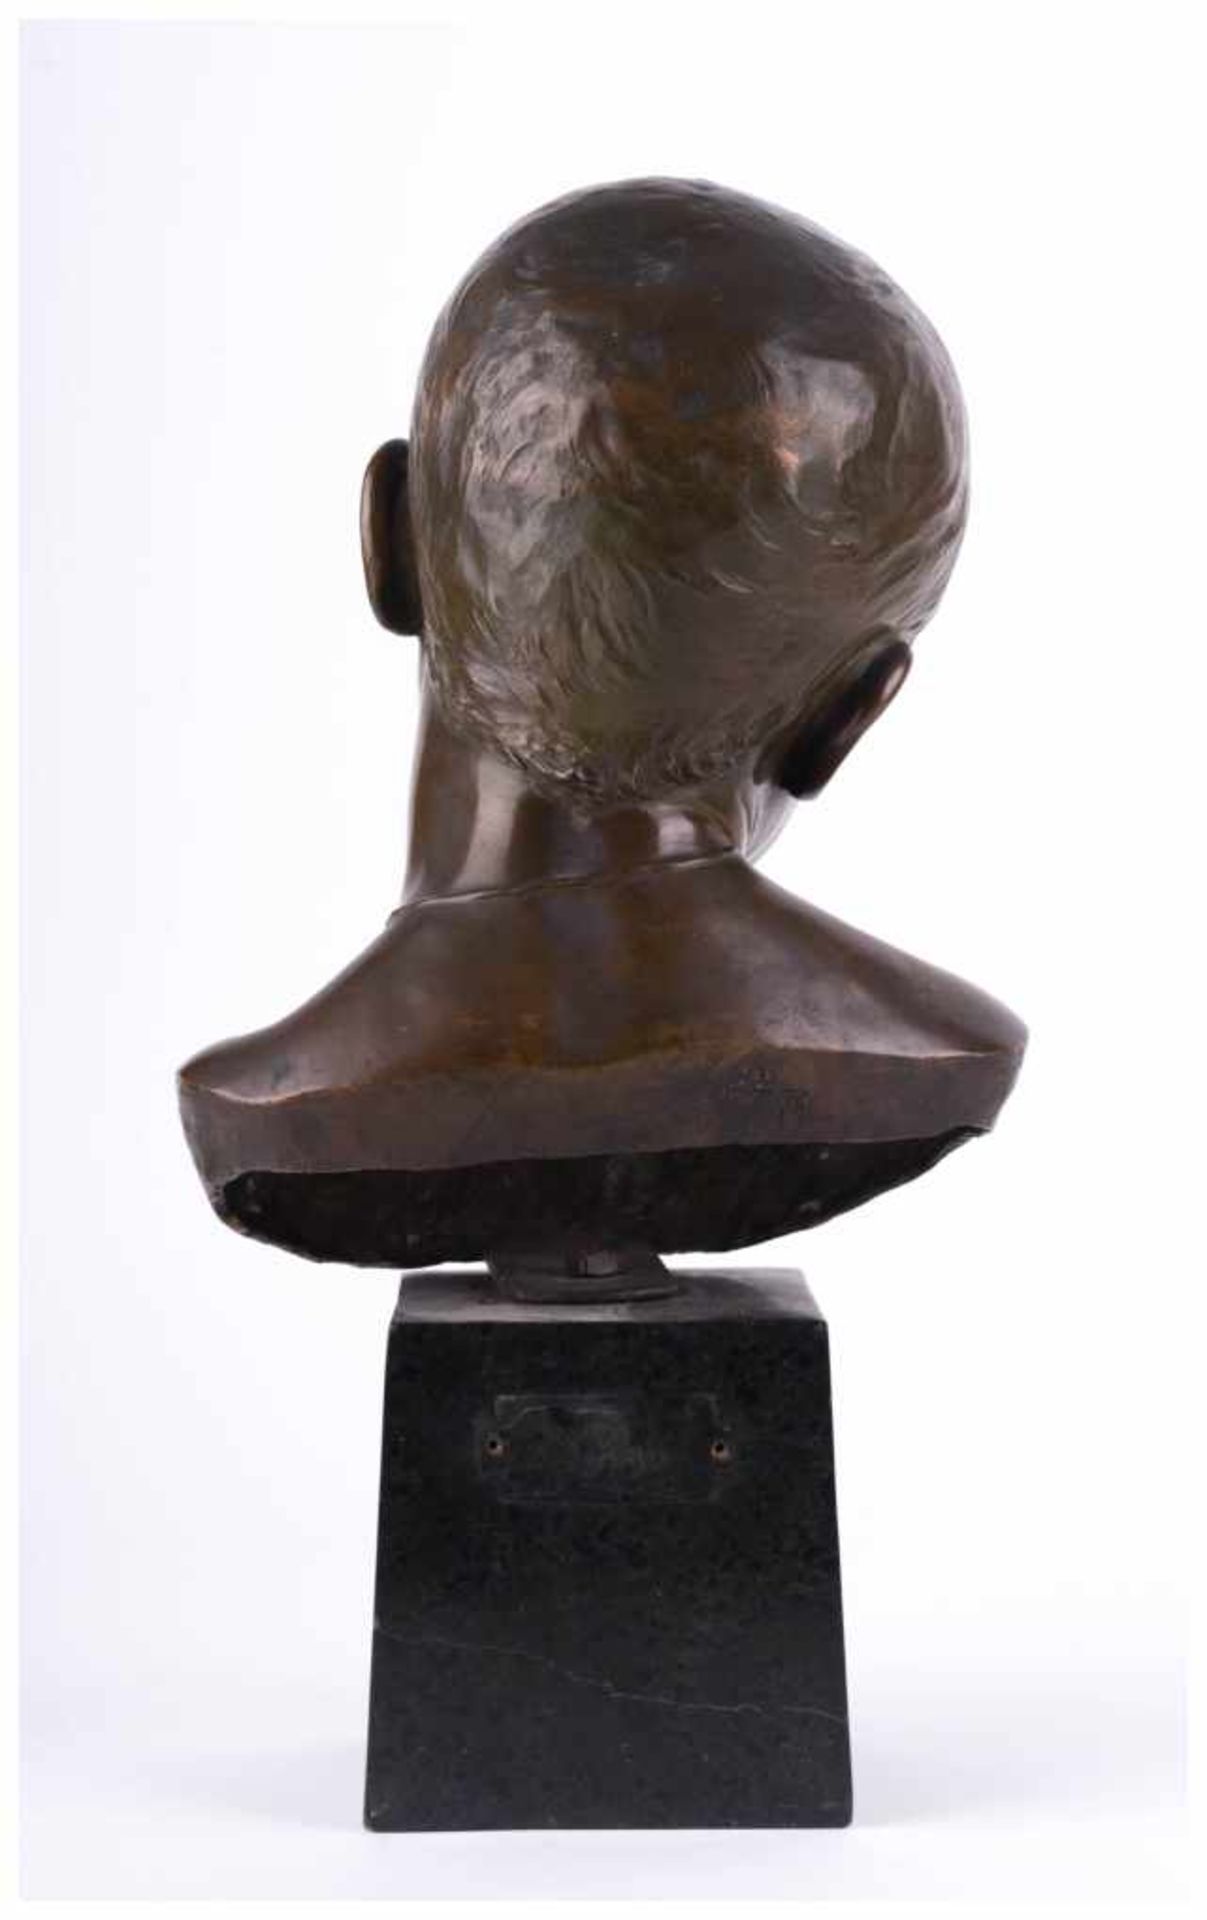 Monogrammist E.R. - "Knabenkopf" - Skulptur-Volumen, Bronze, Gesamthöhe 44 cm, - [...] - Image 8 of 10